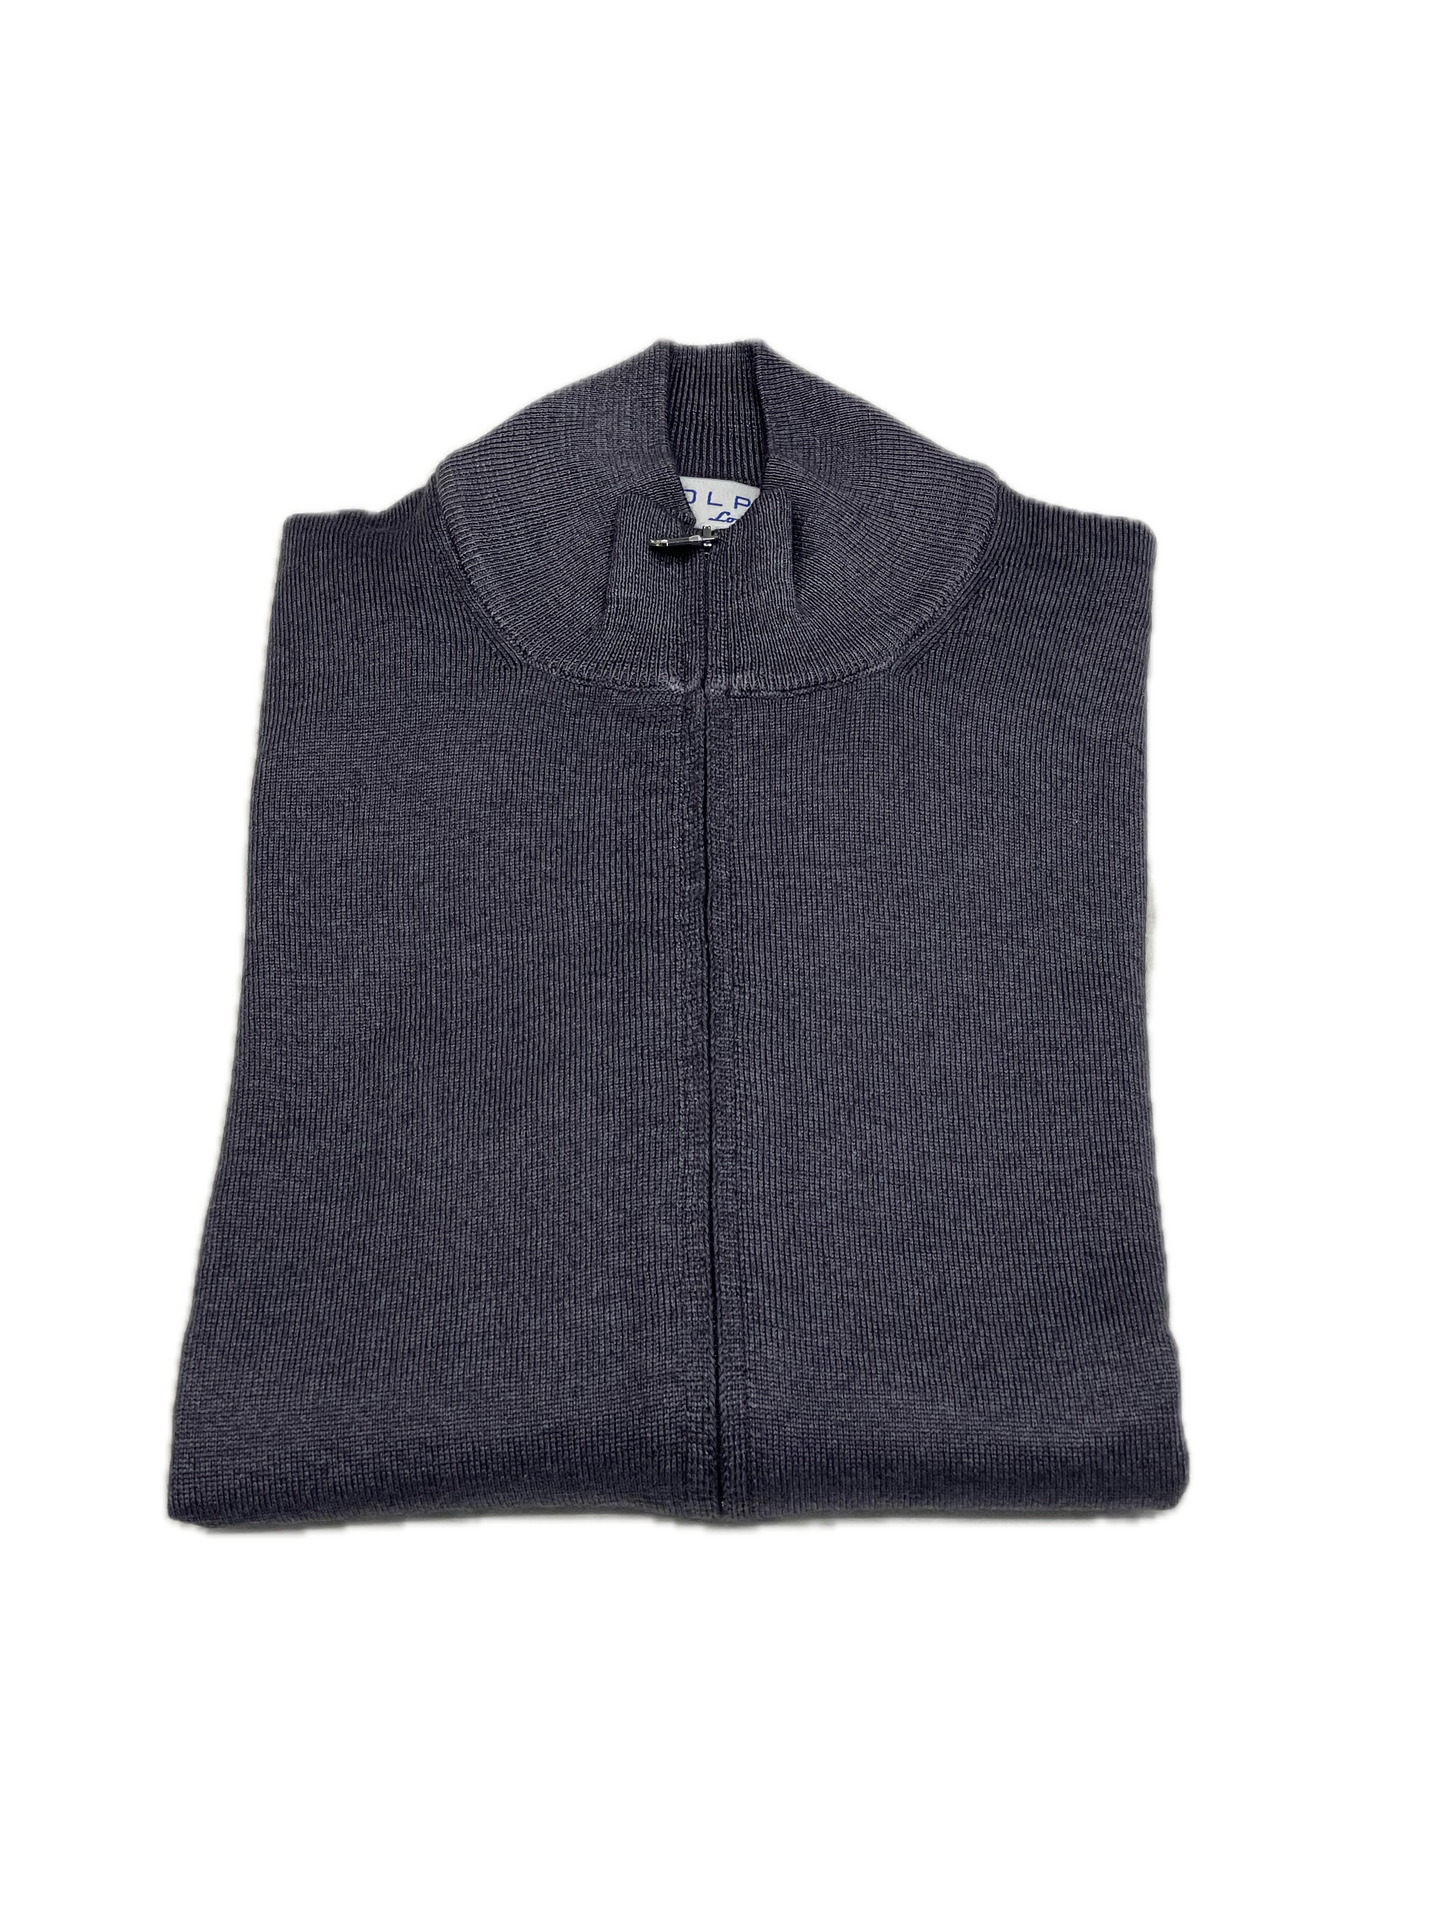 Full Zip sweater zip in grey vintage merino wool